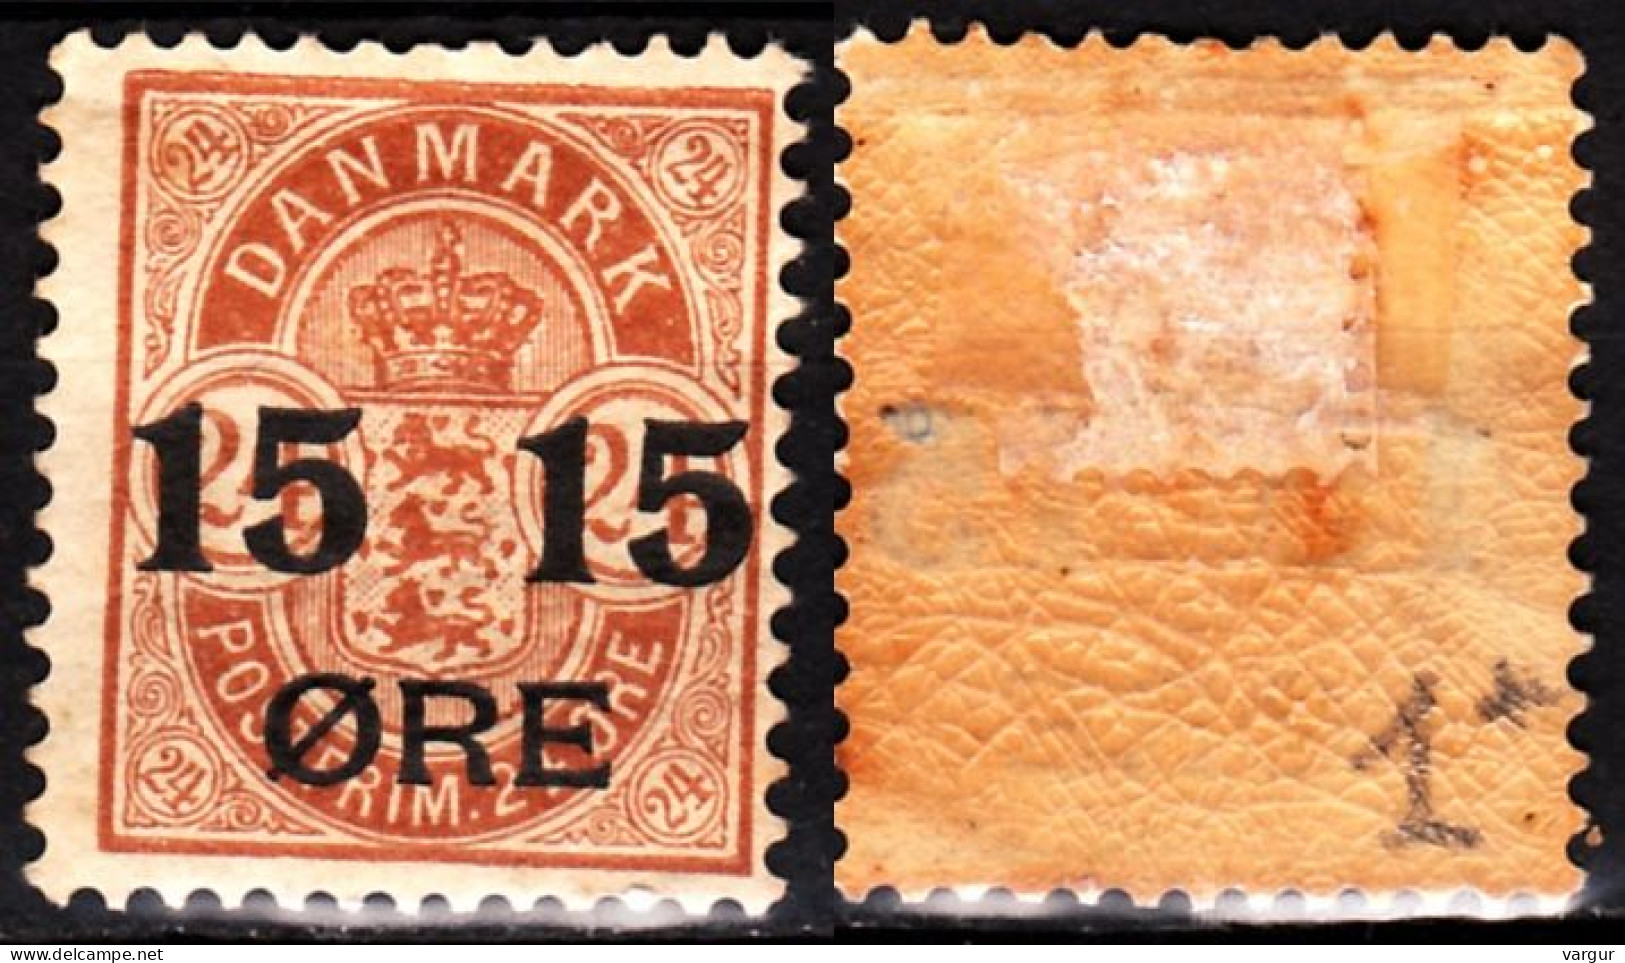 DENMARK 1904 Definitive: Surcharge 15 Ore On 4o, MHOG #1 - Nuovi